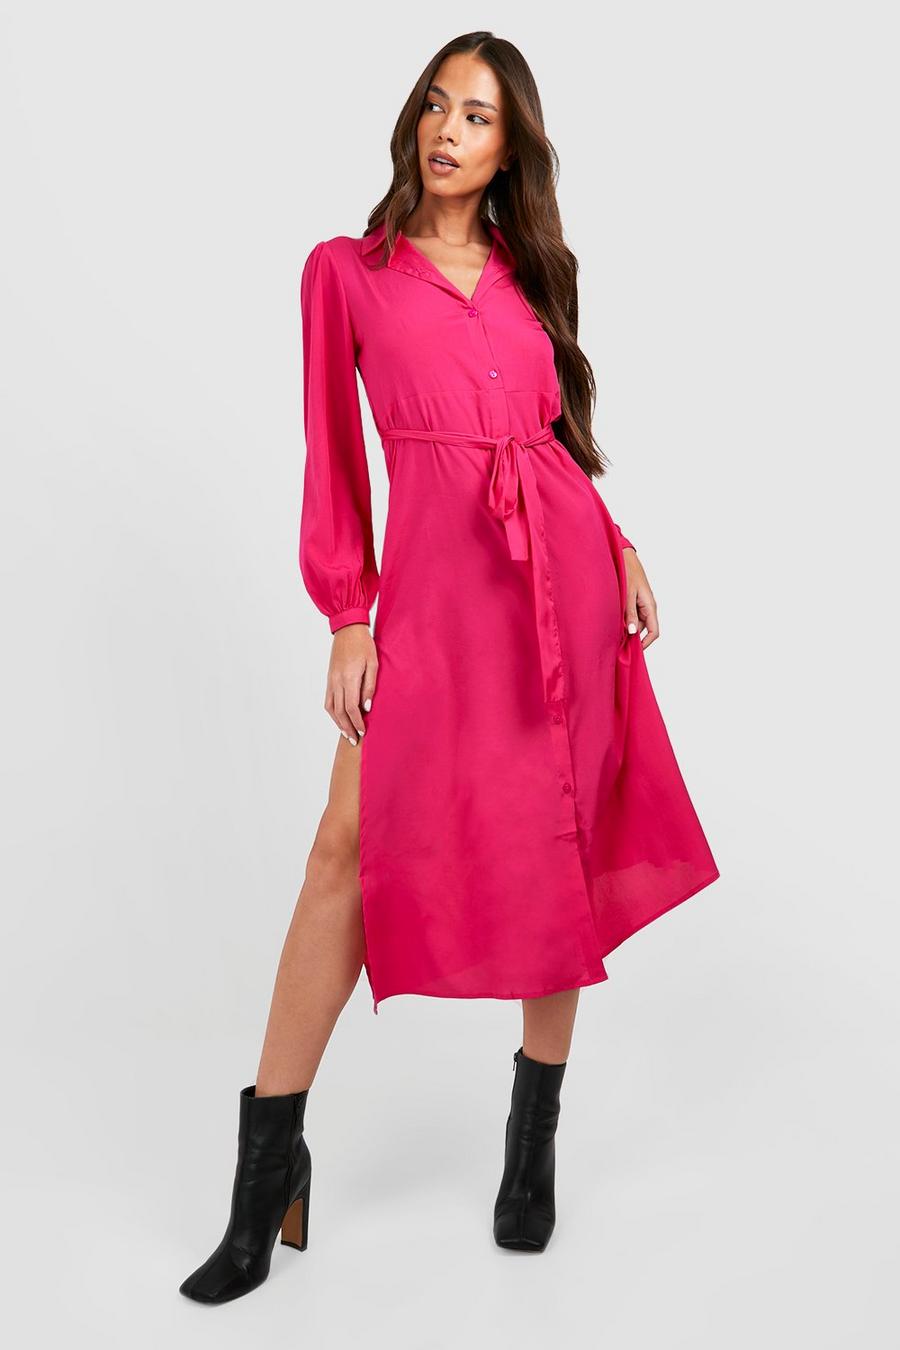 Hot pink The Midi Shirt Dress